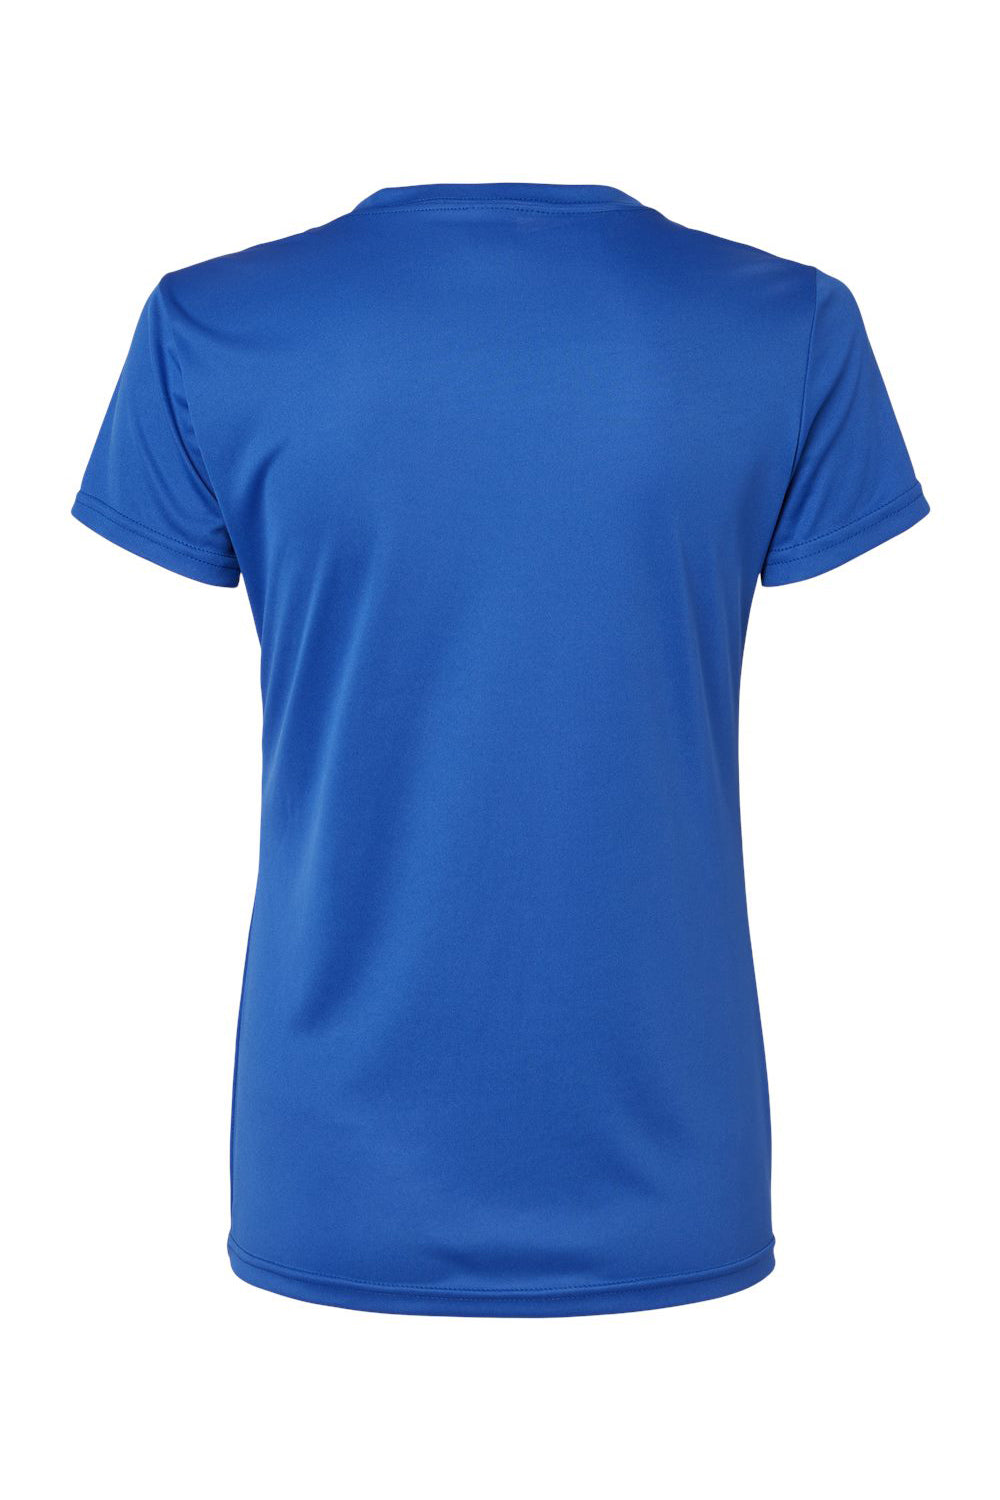 Paragon 203 Womens Vera Short Sleeve V-Neck T-Shirt Royal Blue Flat Back